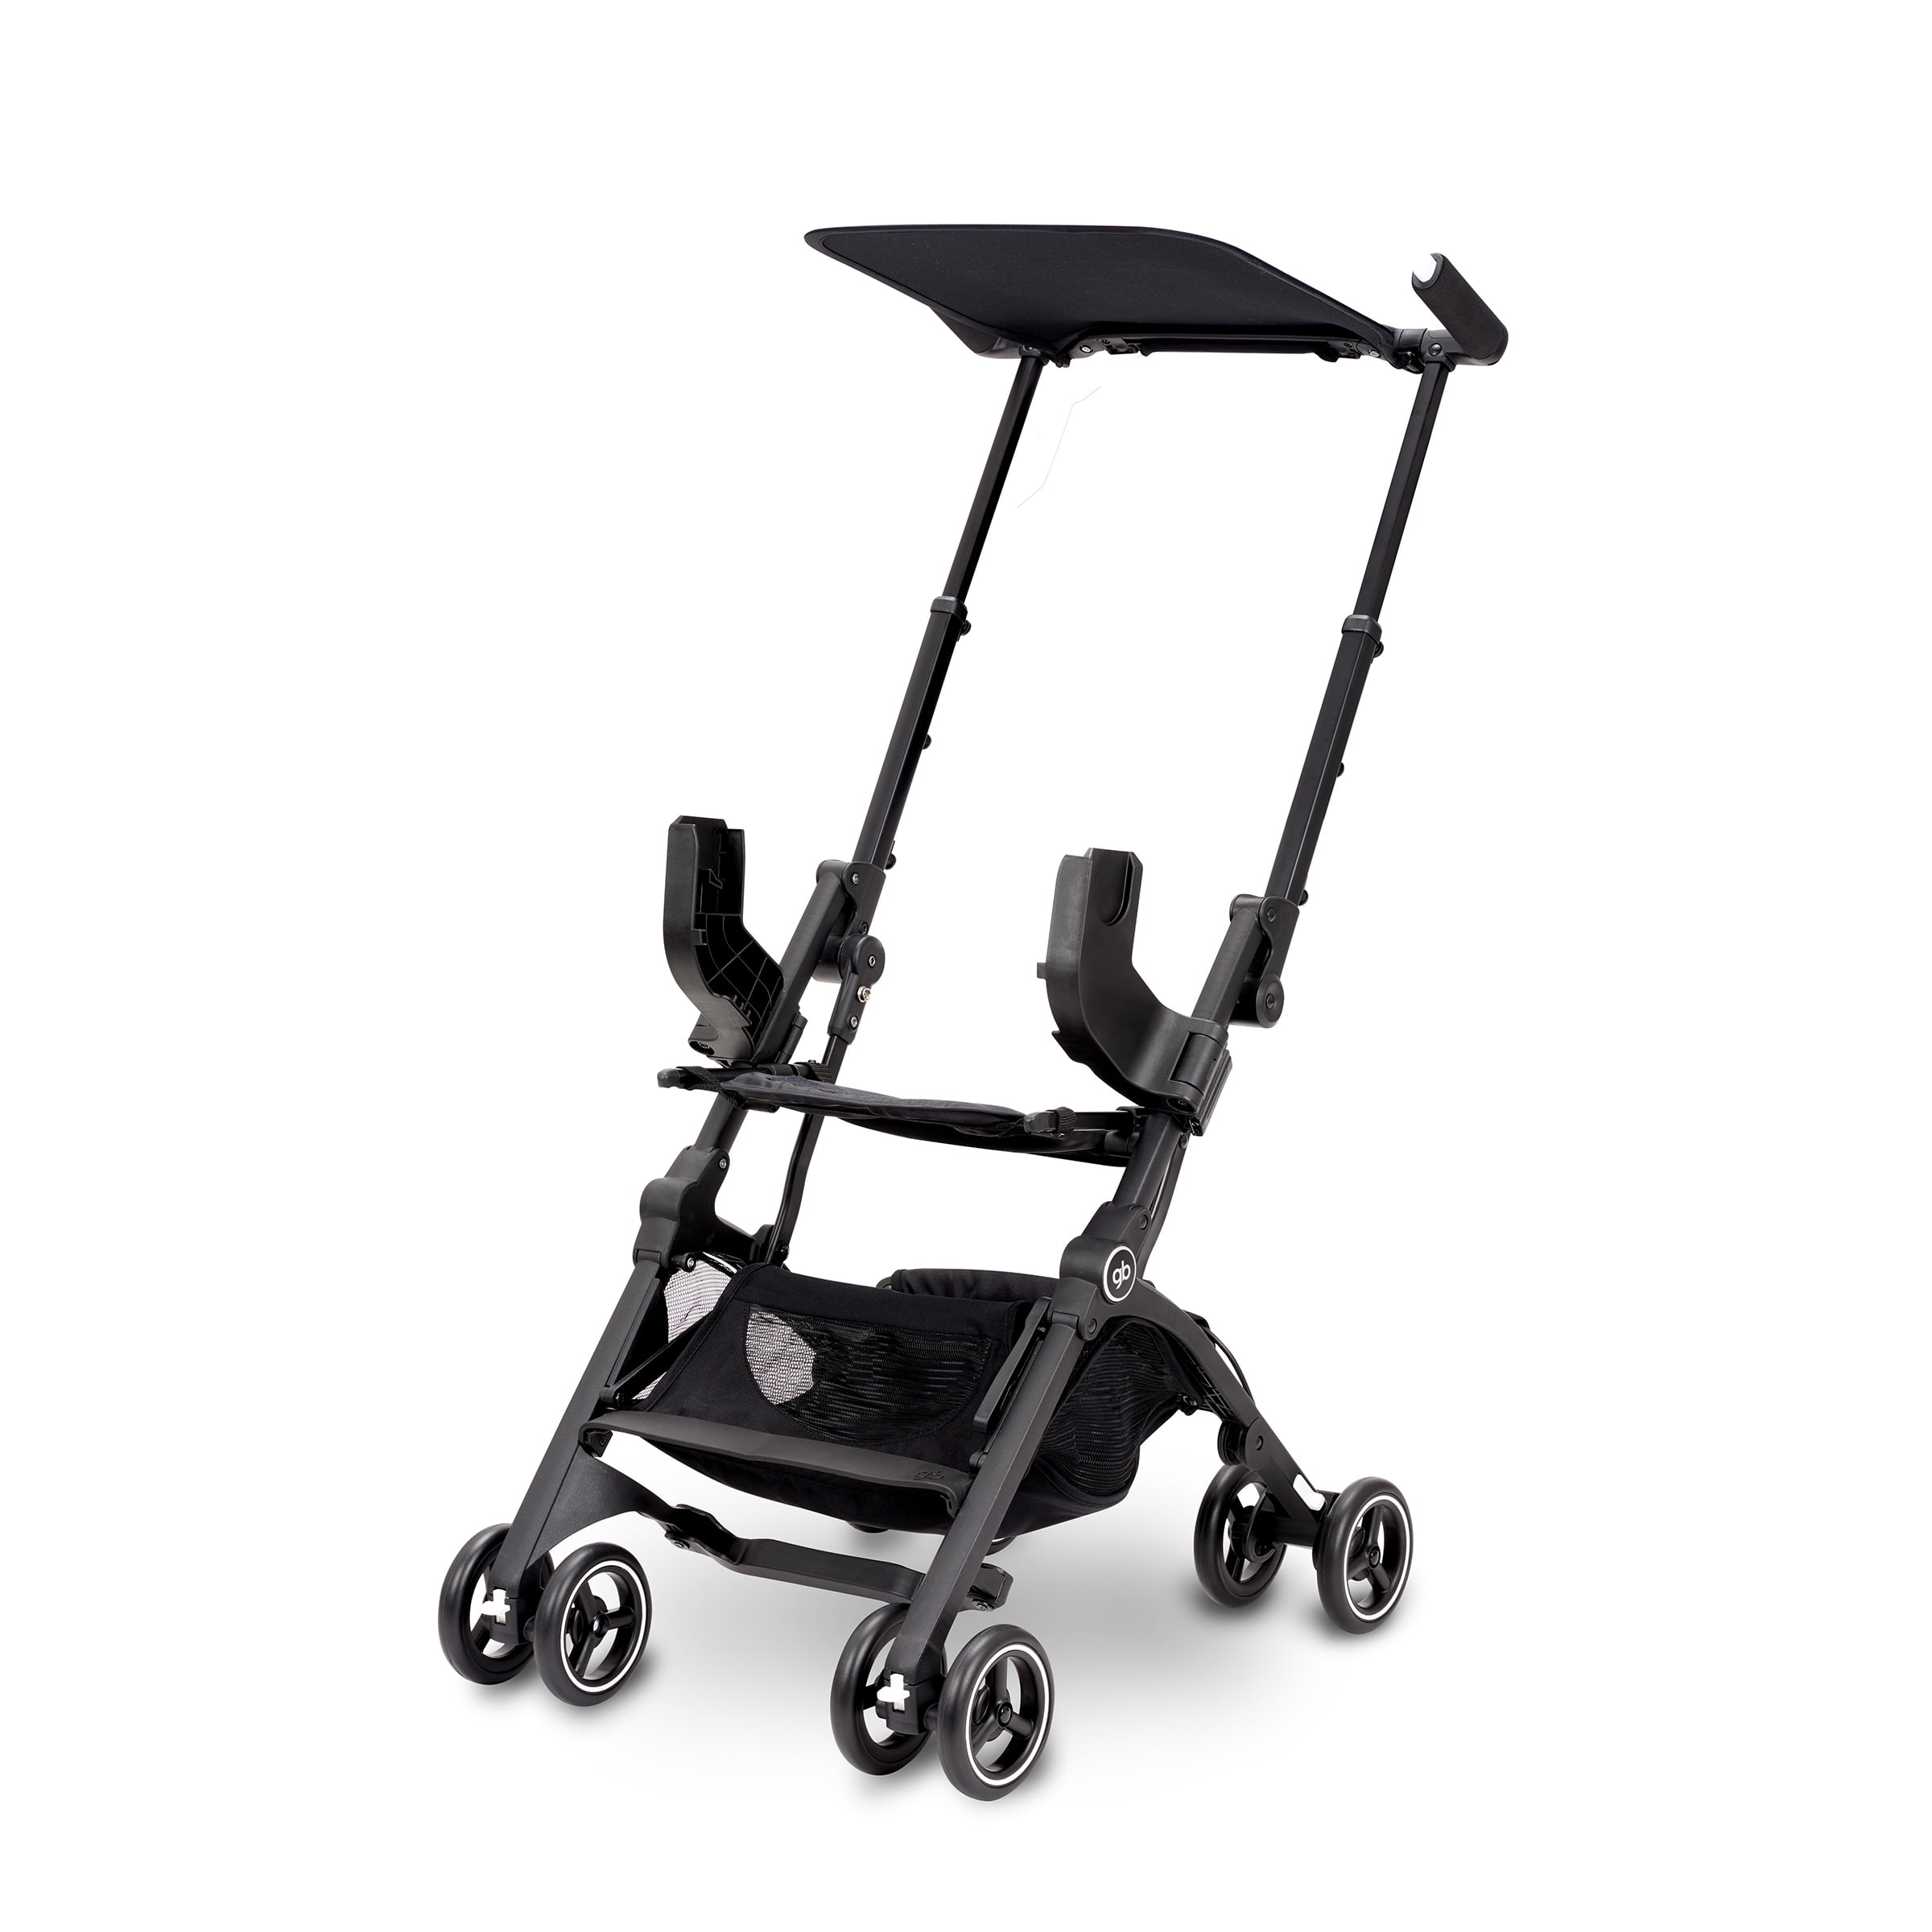 the gb pockit stroller